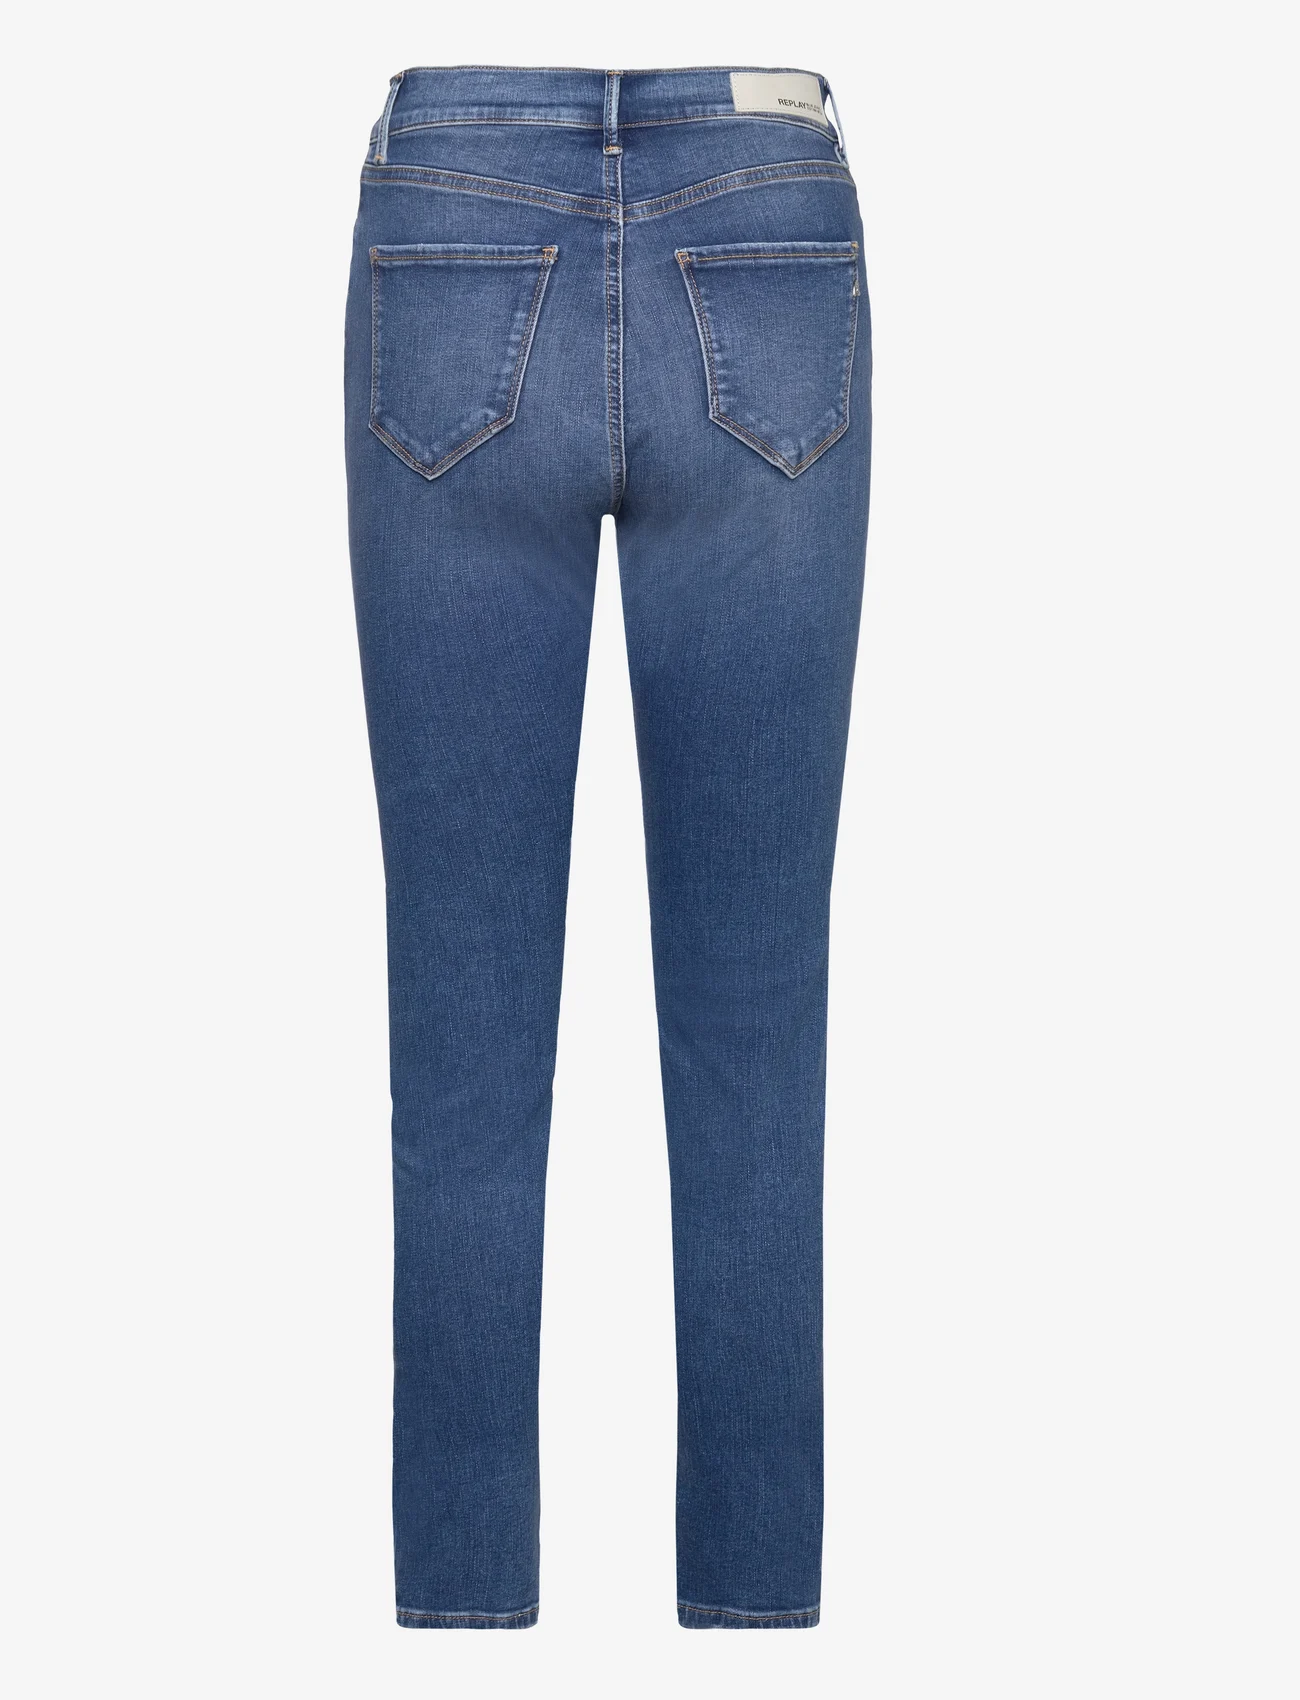 Replay - MJLA Trousers SUPER SLIM HIGH WAIST - slim jeans - blue - 1